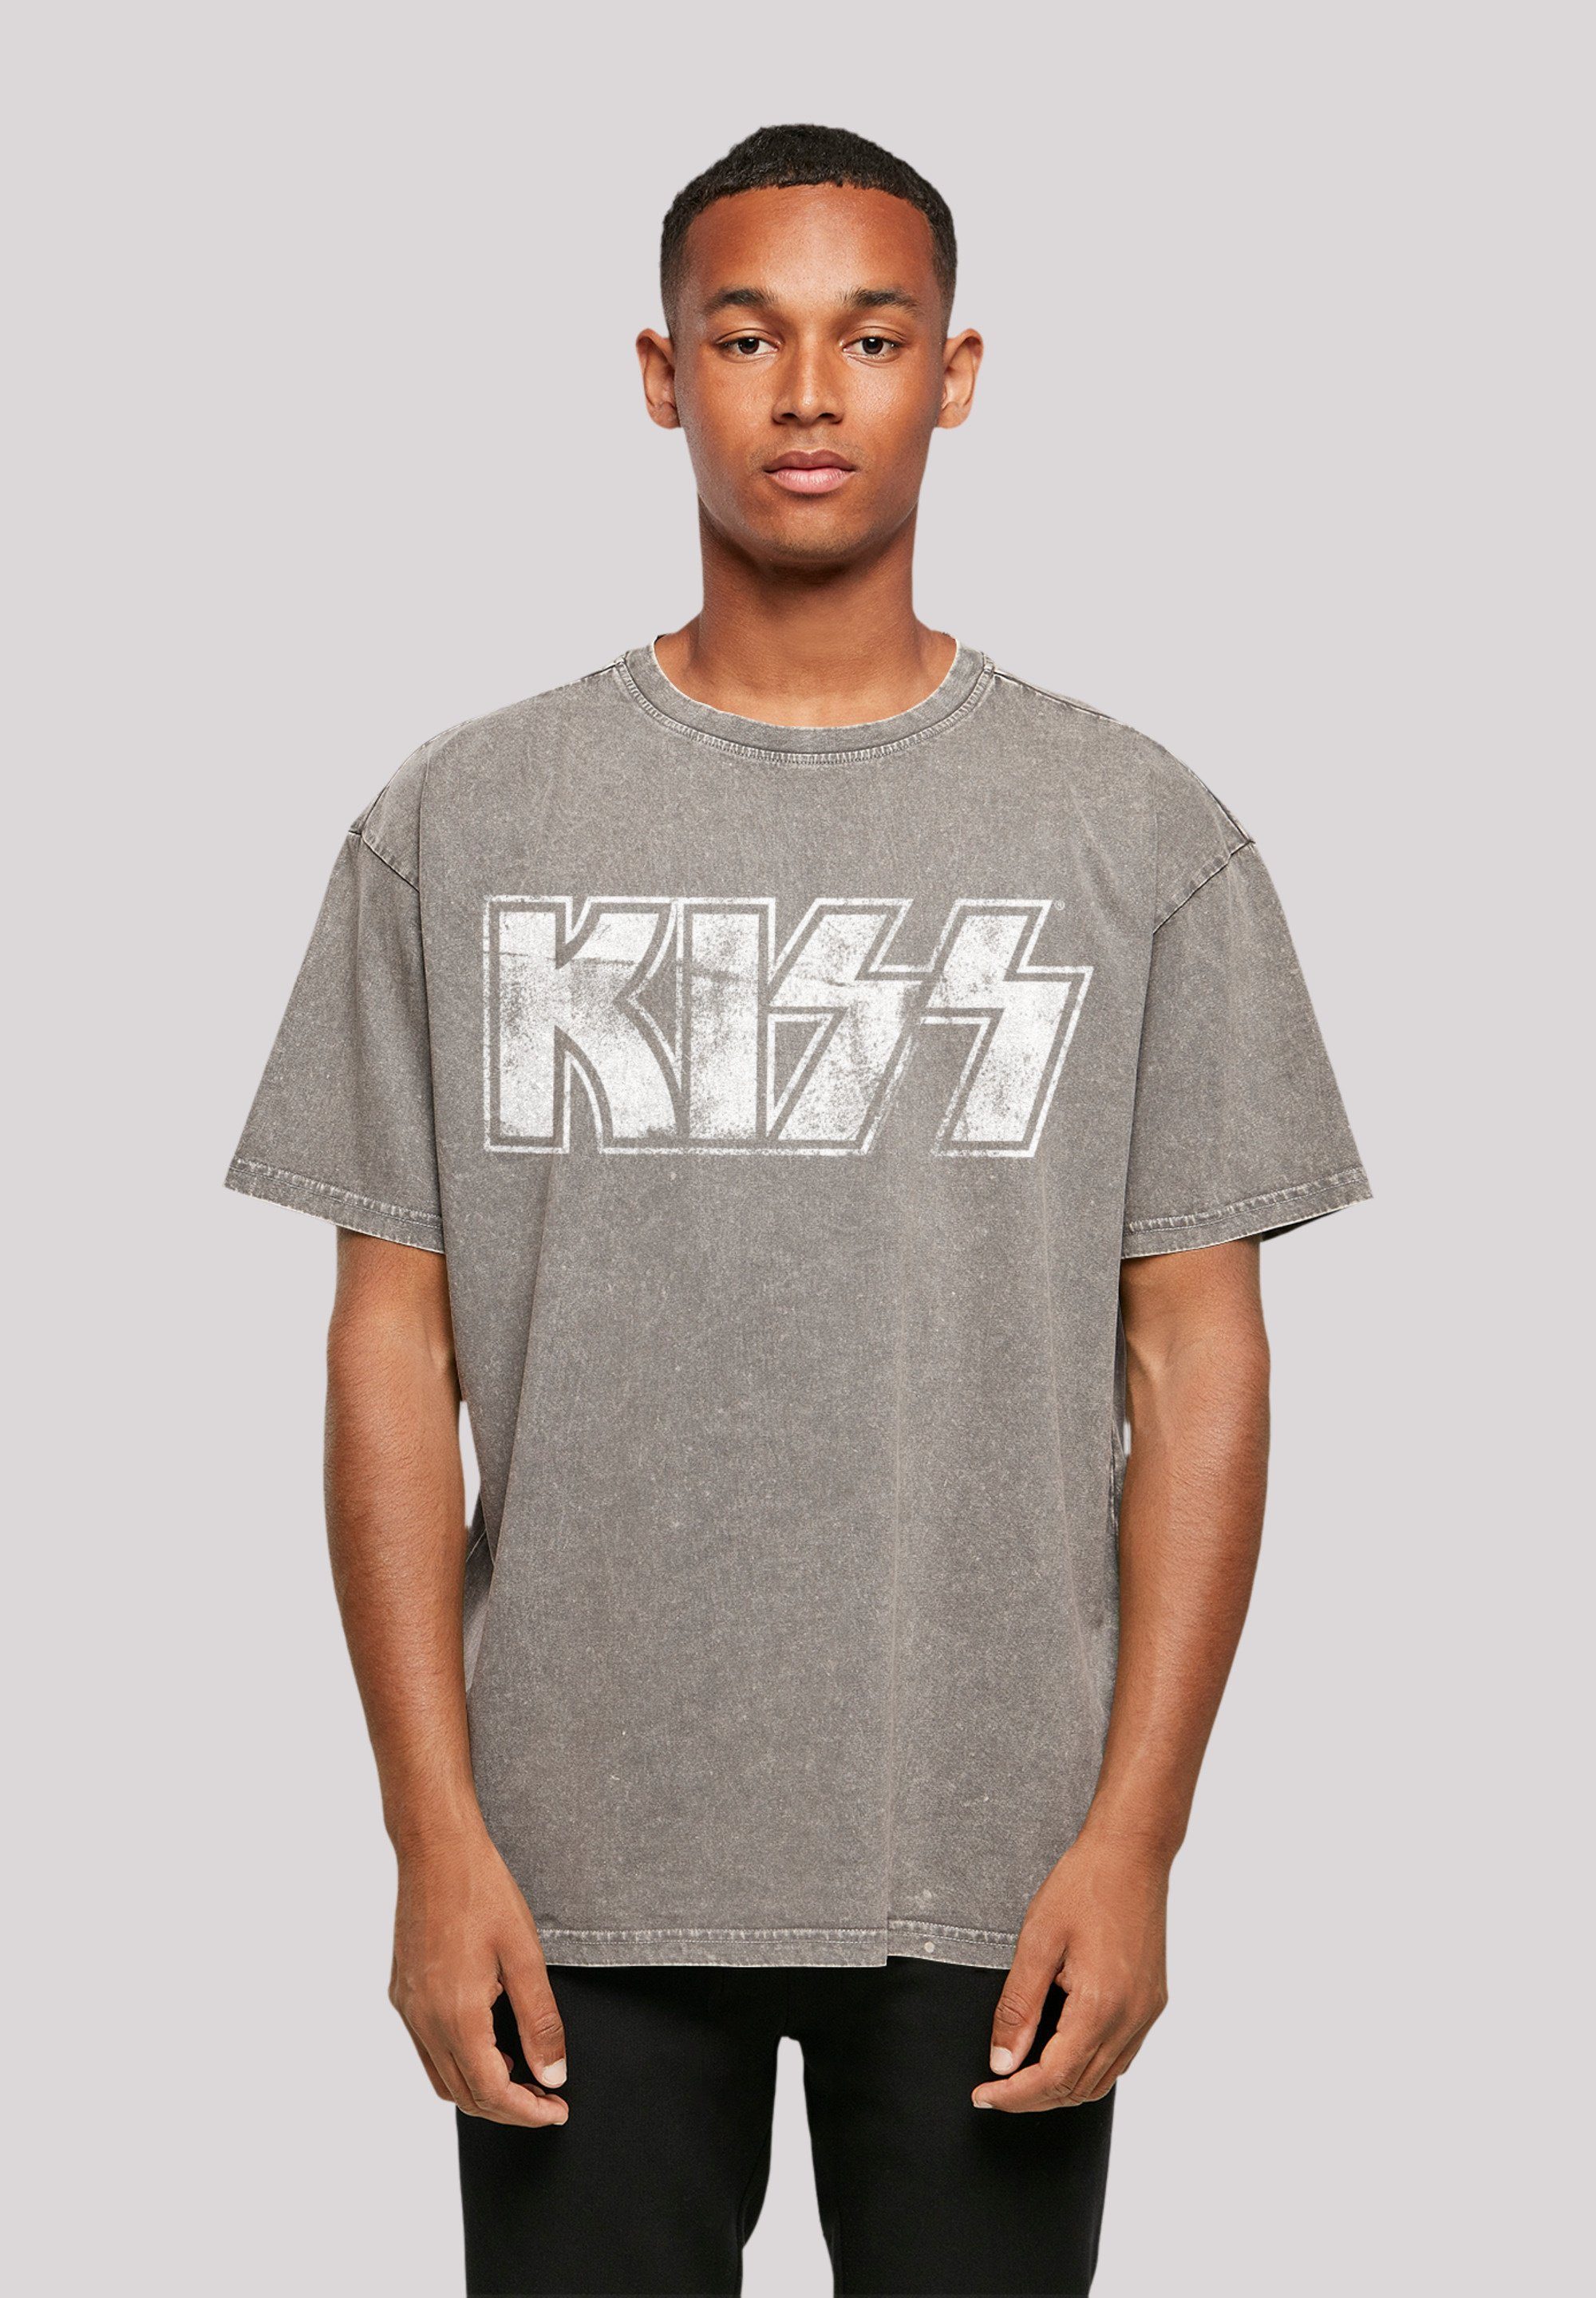 F4NT4STIC T-Shirt Kiss Rock Band Vintage Logo Premium Qualität, Musik, By Rock Off Asphalt